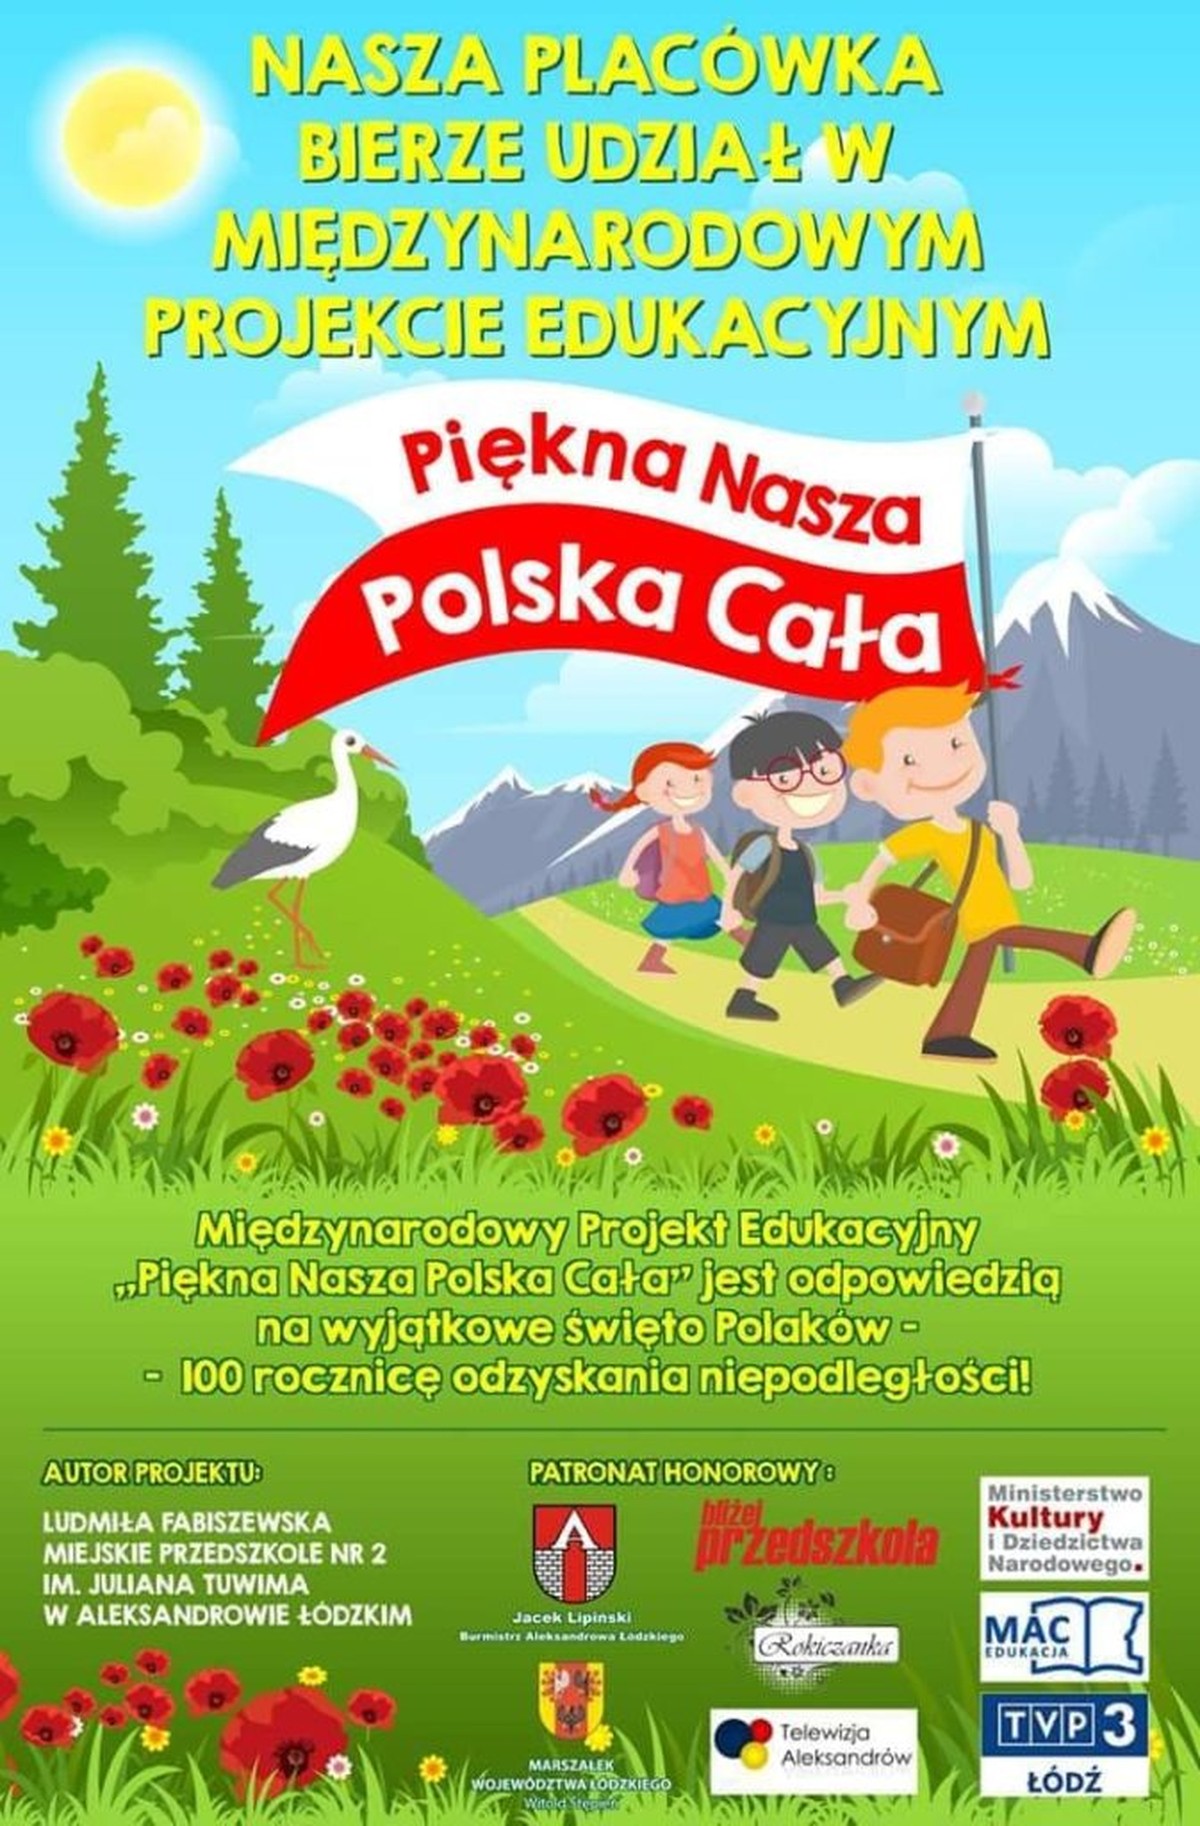 Projekt "Piękna Nasza Polska Cała"